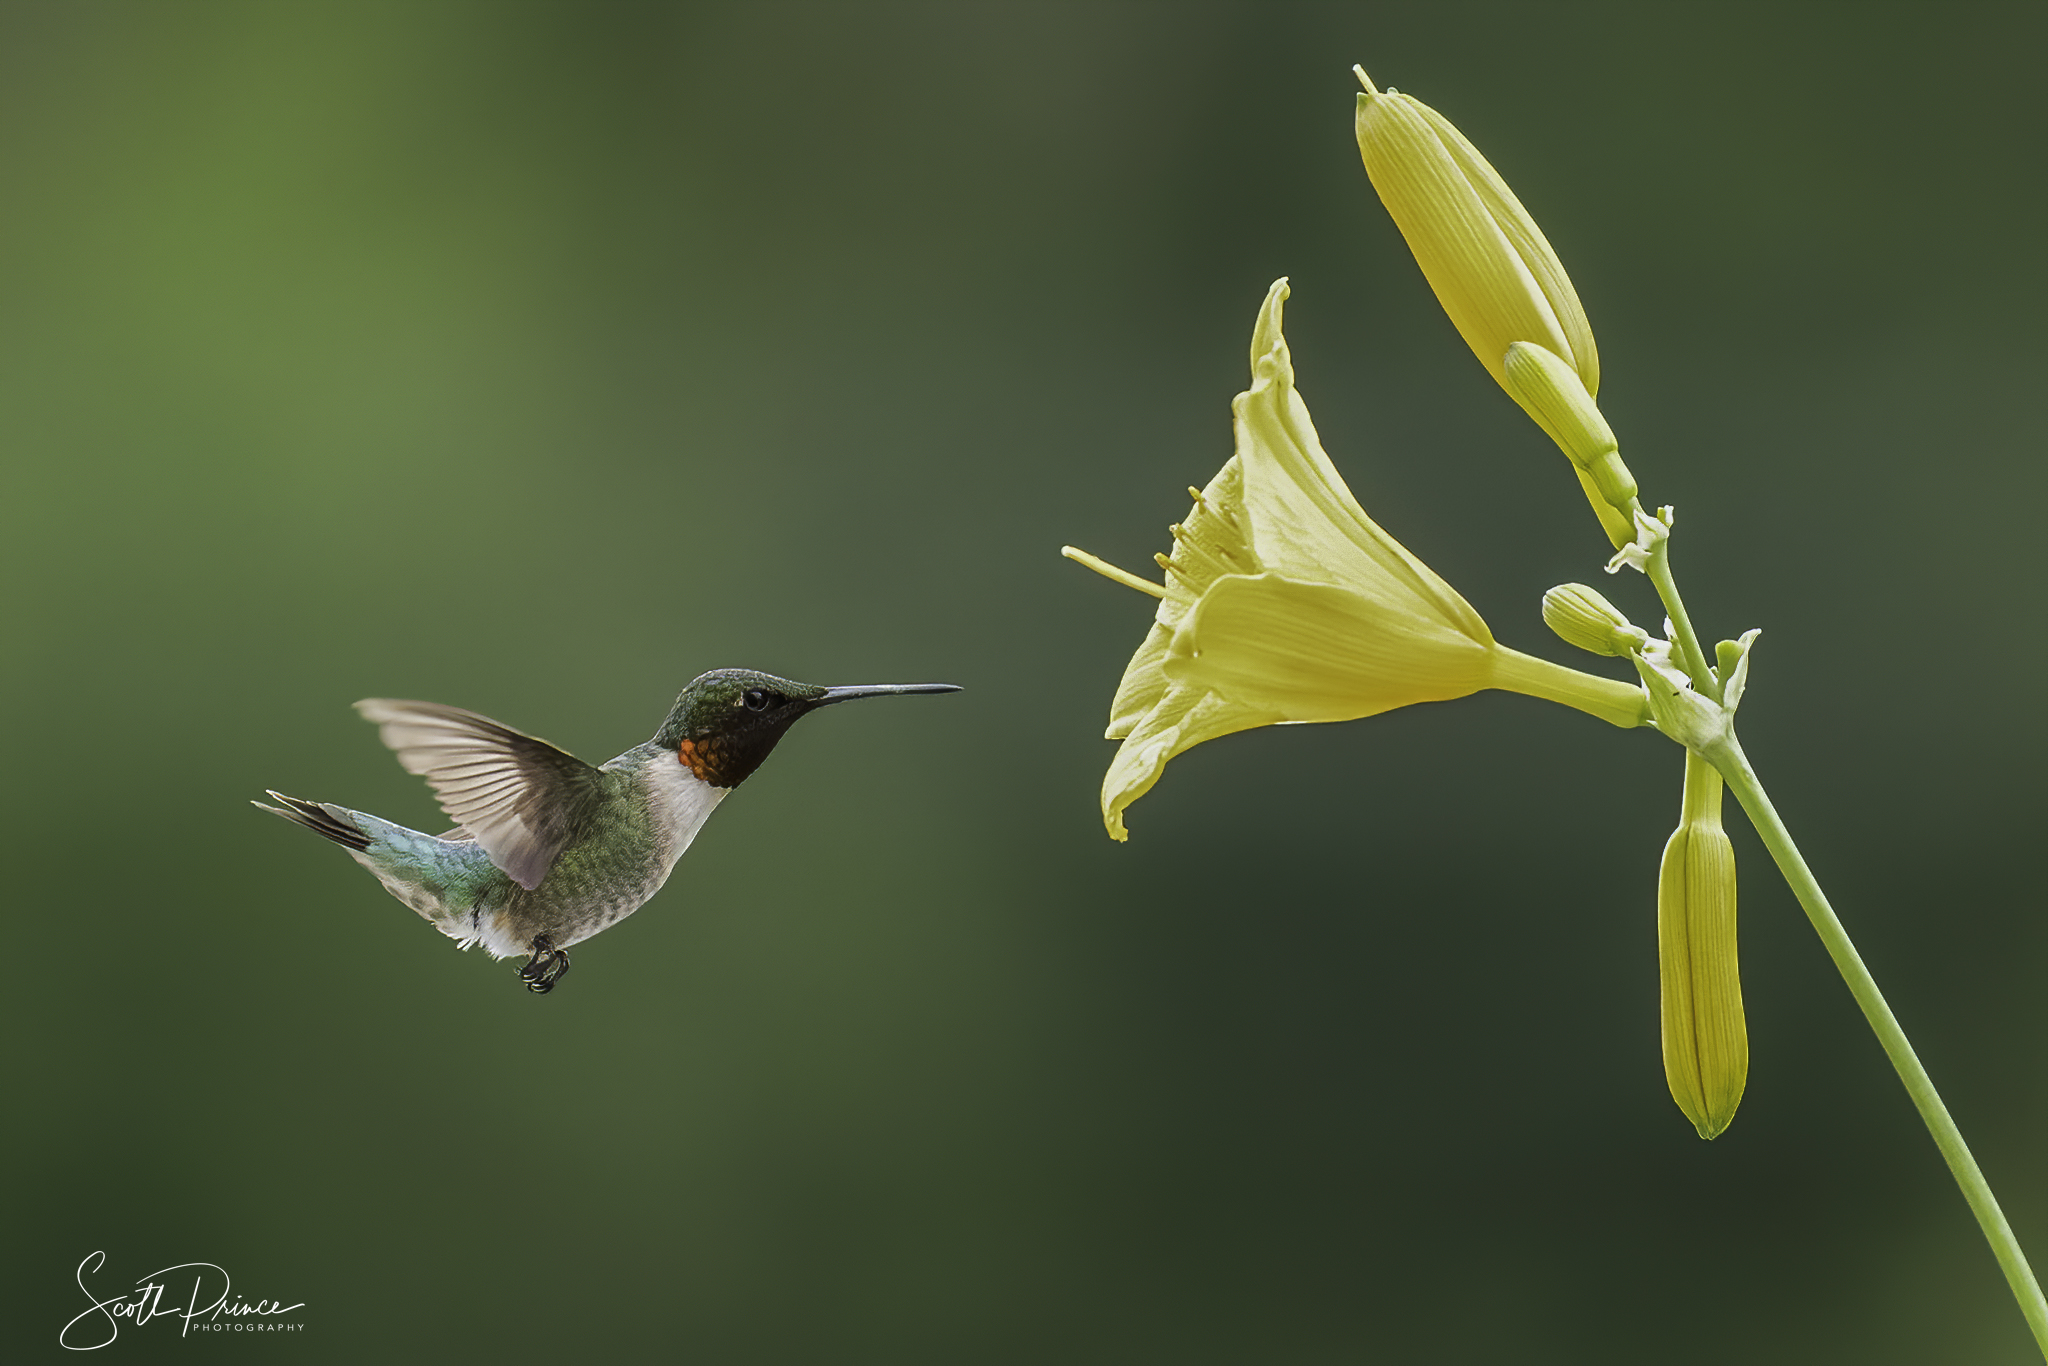 how to photograph hummingbirds